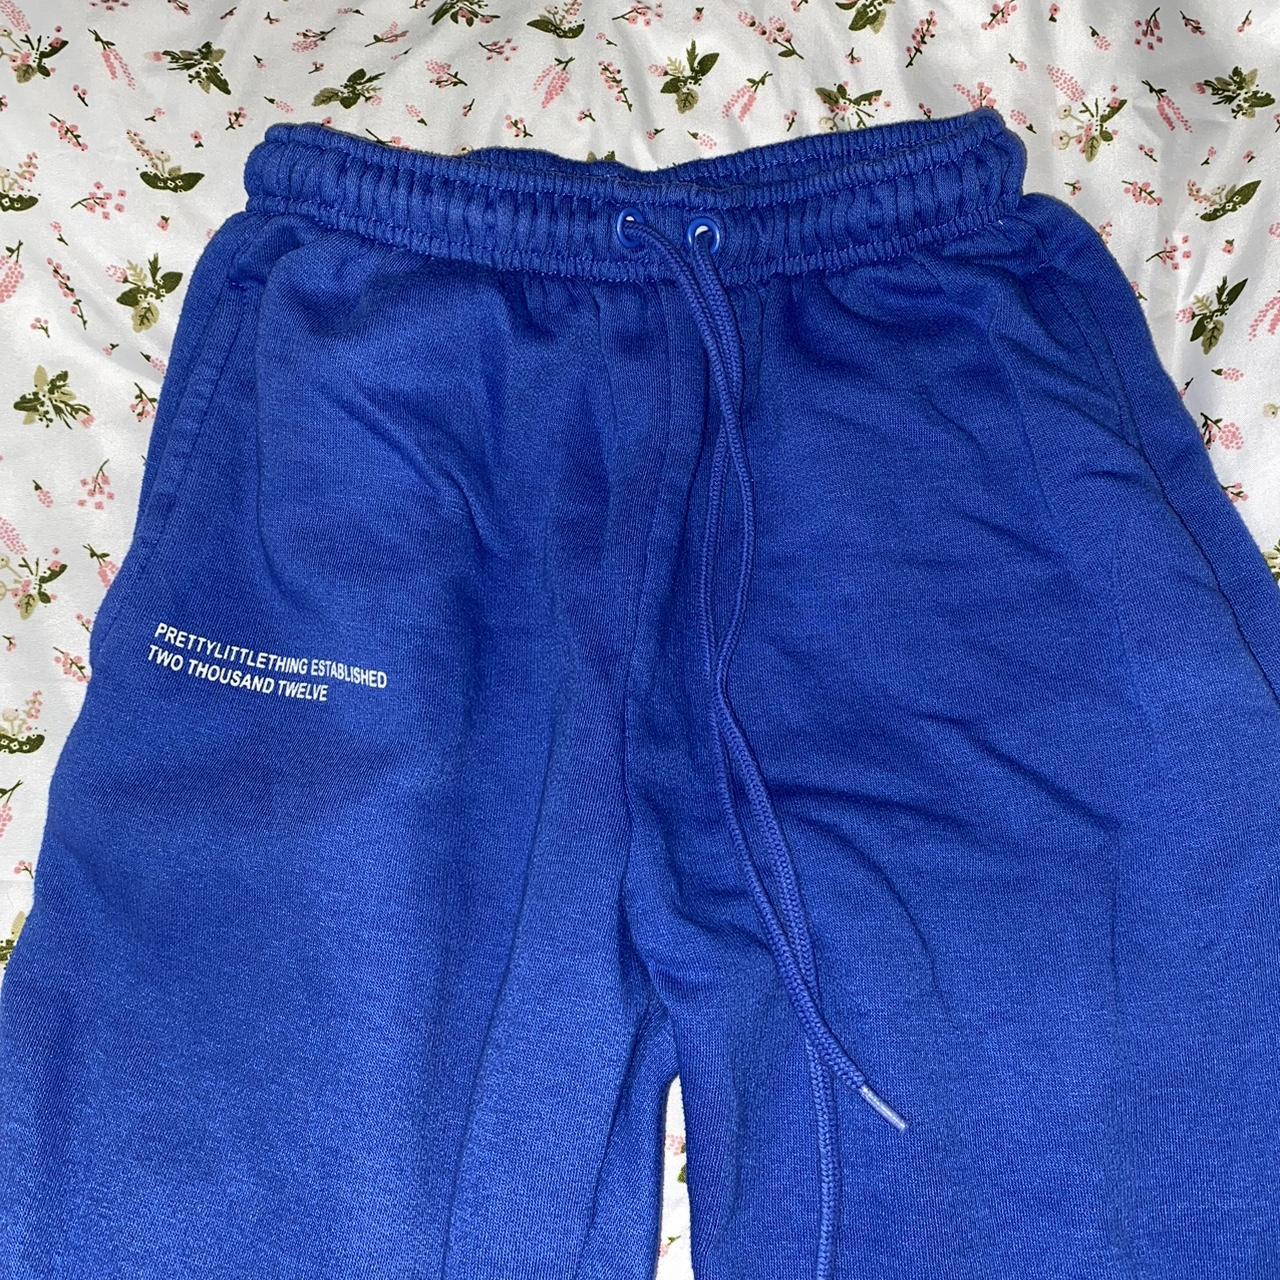 PRETTYLITTLETHING Bright Blue Est 2012 Sweatpants